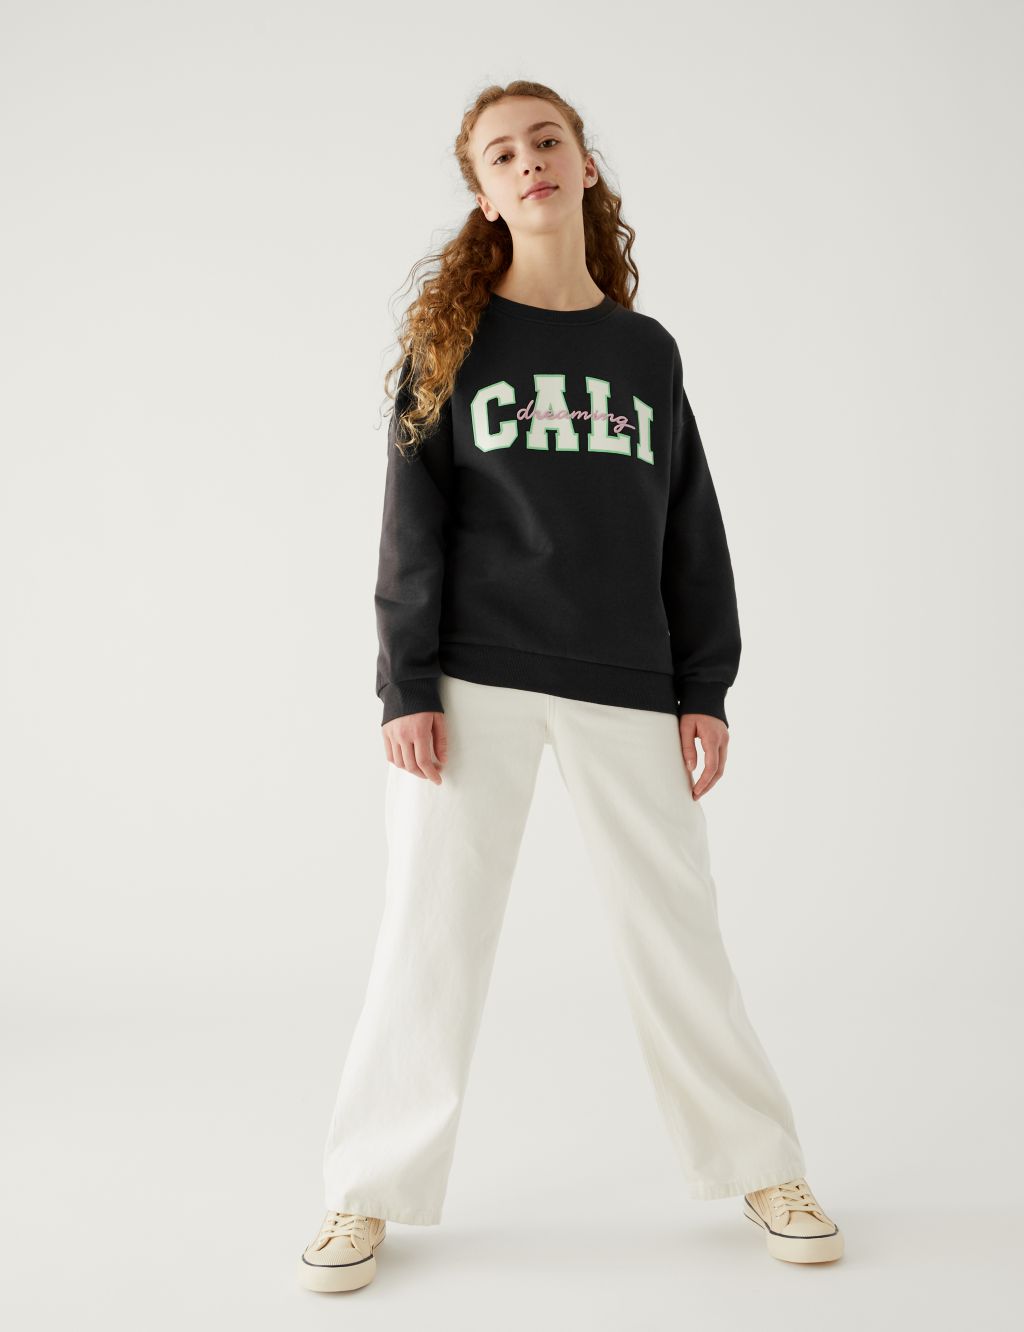 Cotton Rich Cali Dreaming Slogan Sweatshirt (6-16 Yrs) image 1